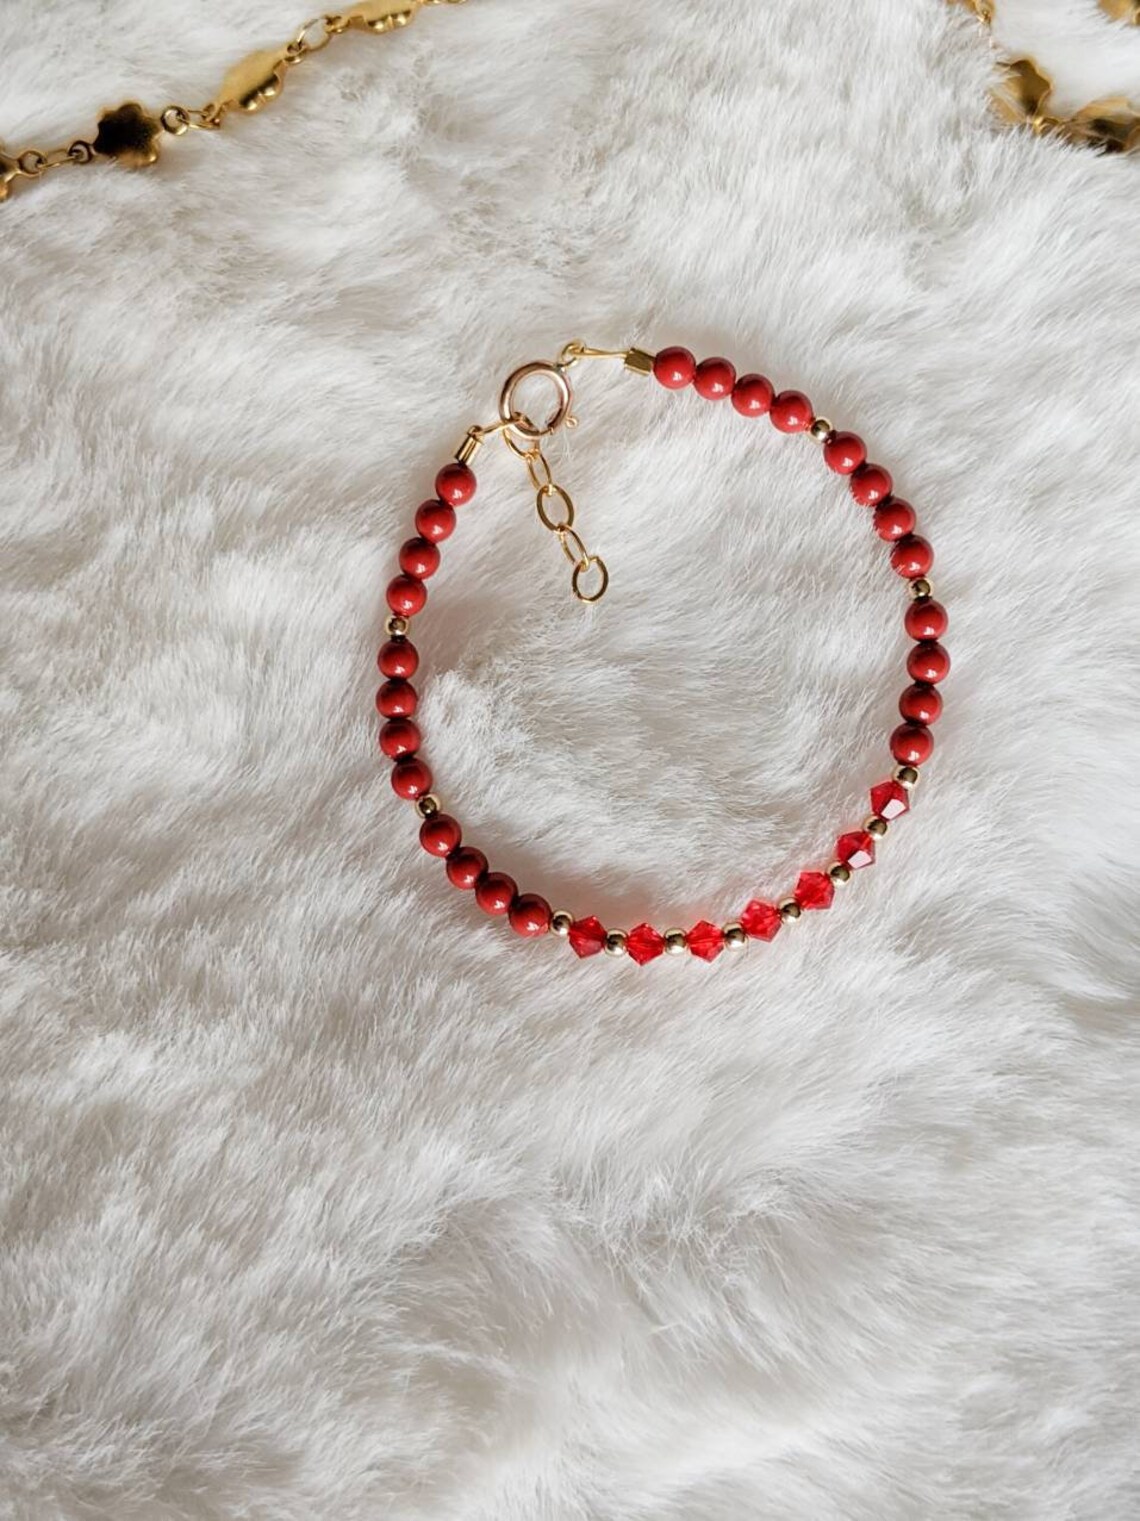 Baby Girl Bracelet with Red Swarovski Beads 14K Gold Filled | Etsy